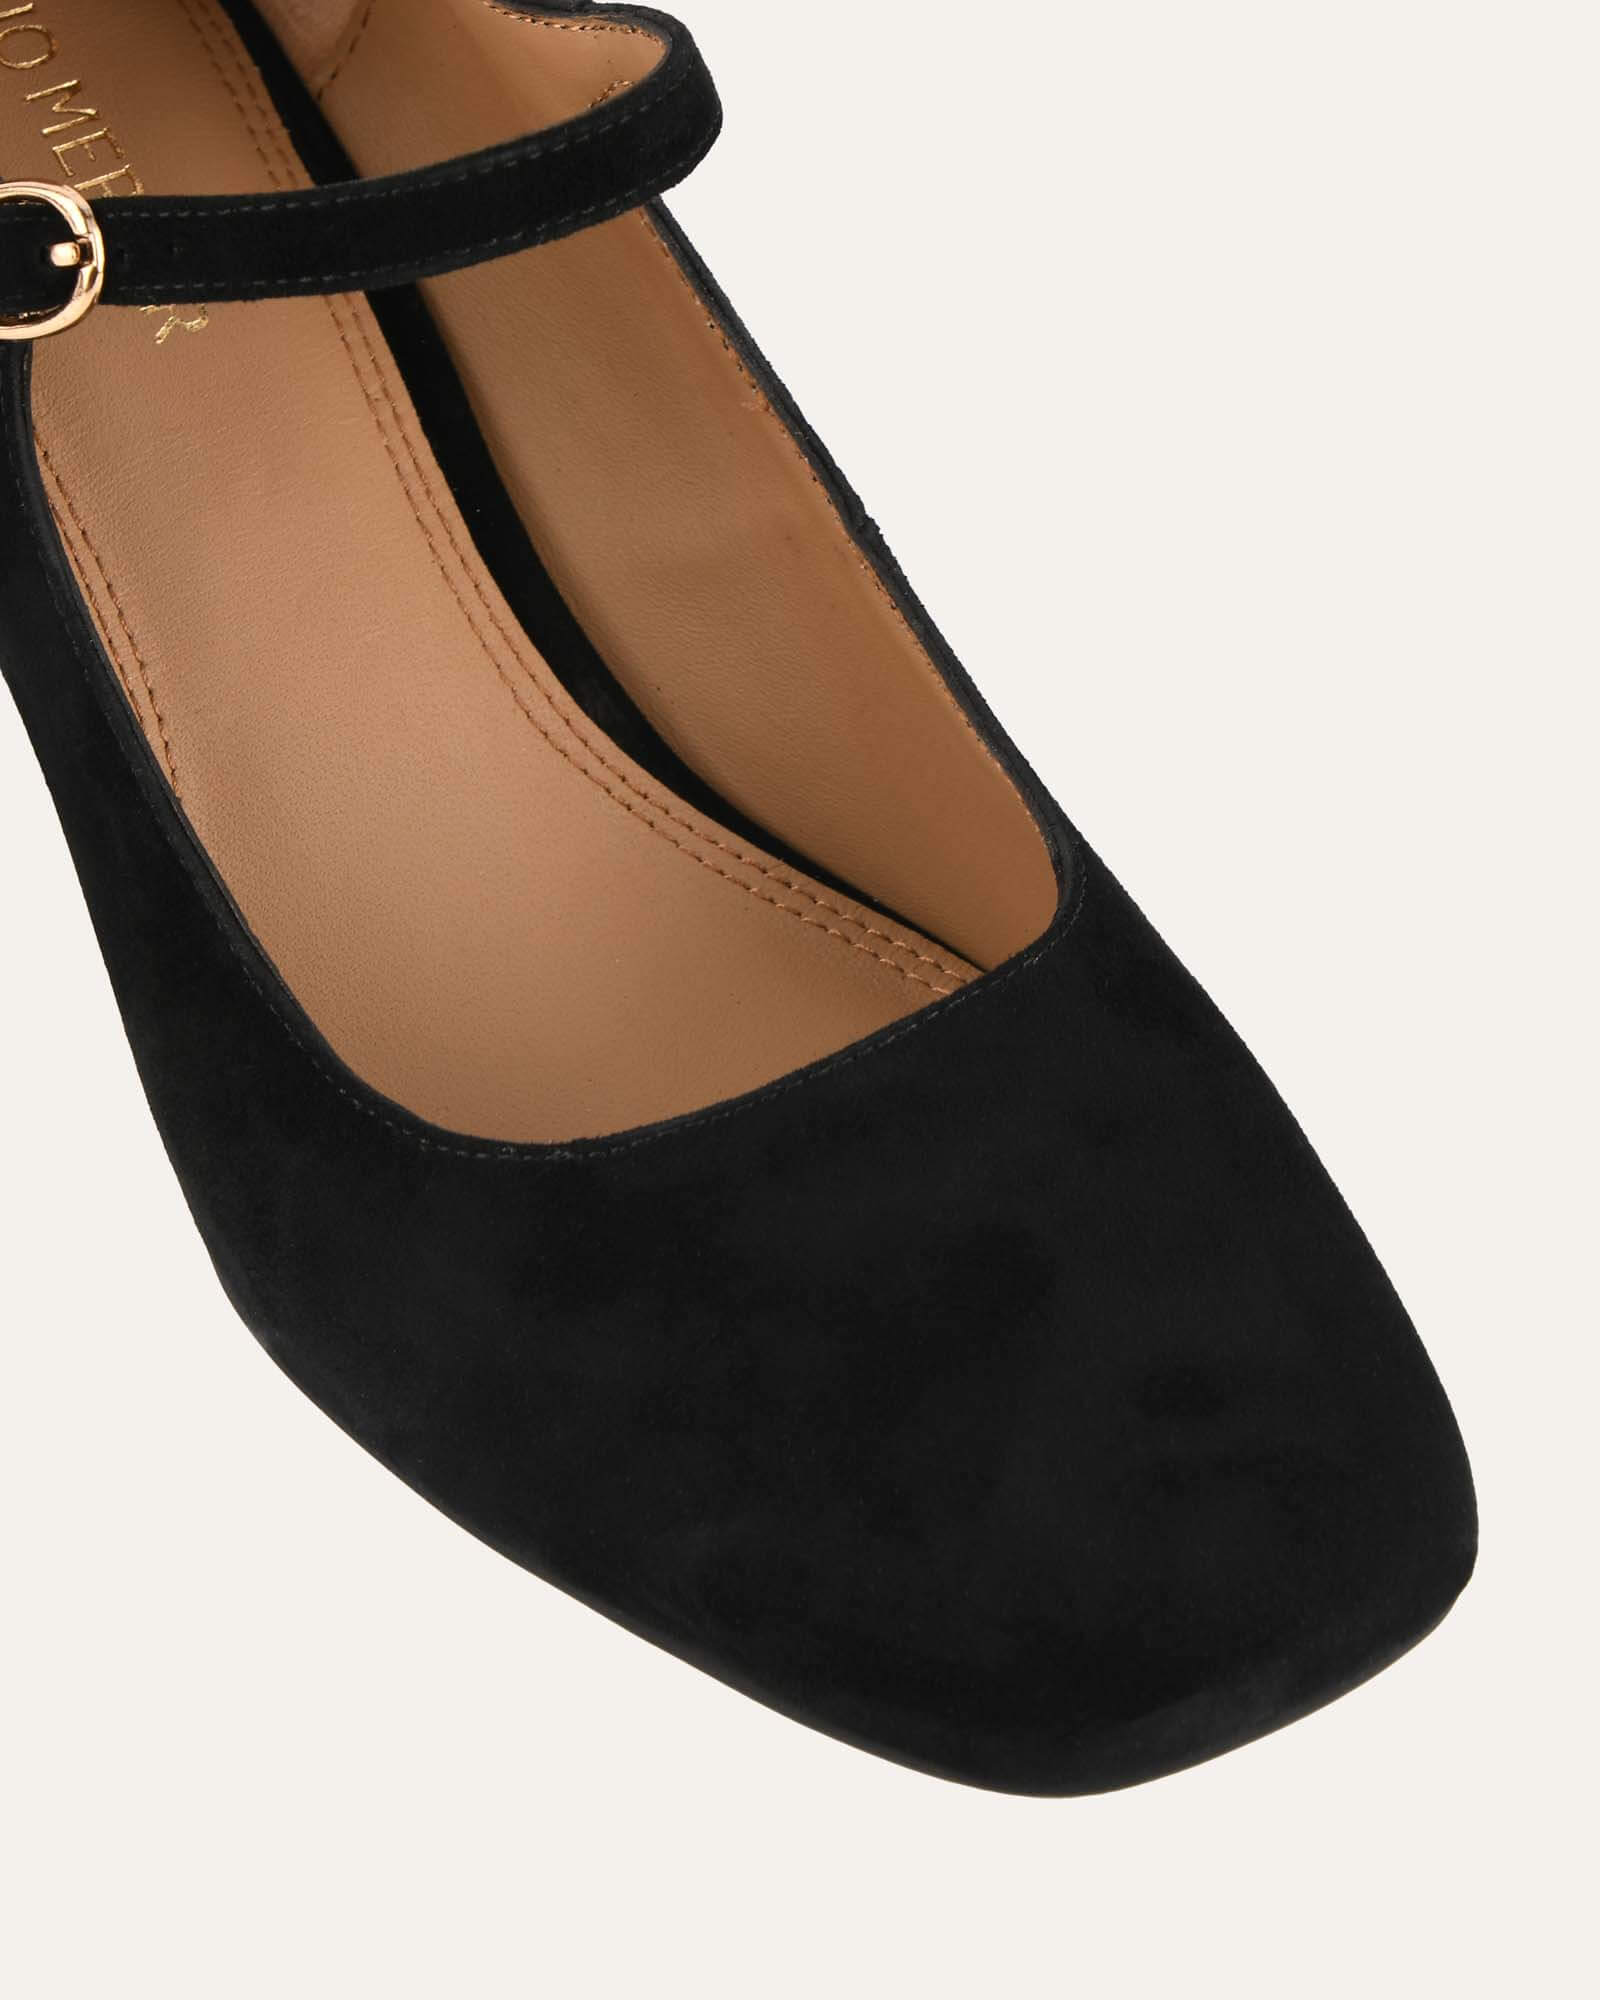 Women's Black Suede 2 1/2 Inch Suede Mid Heel Pump | Jensine by Sole  Society | Women shoes, Heels, Black pumps heels